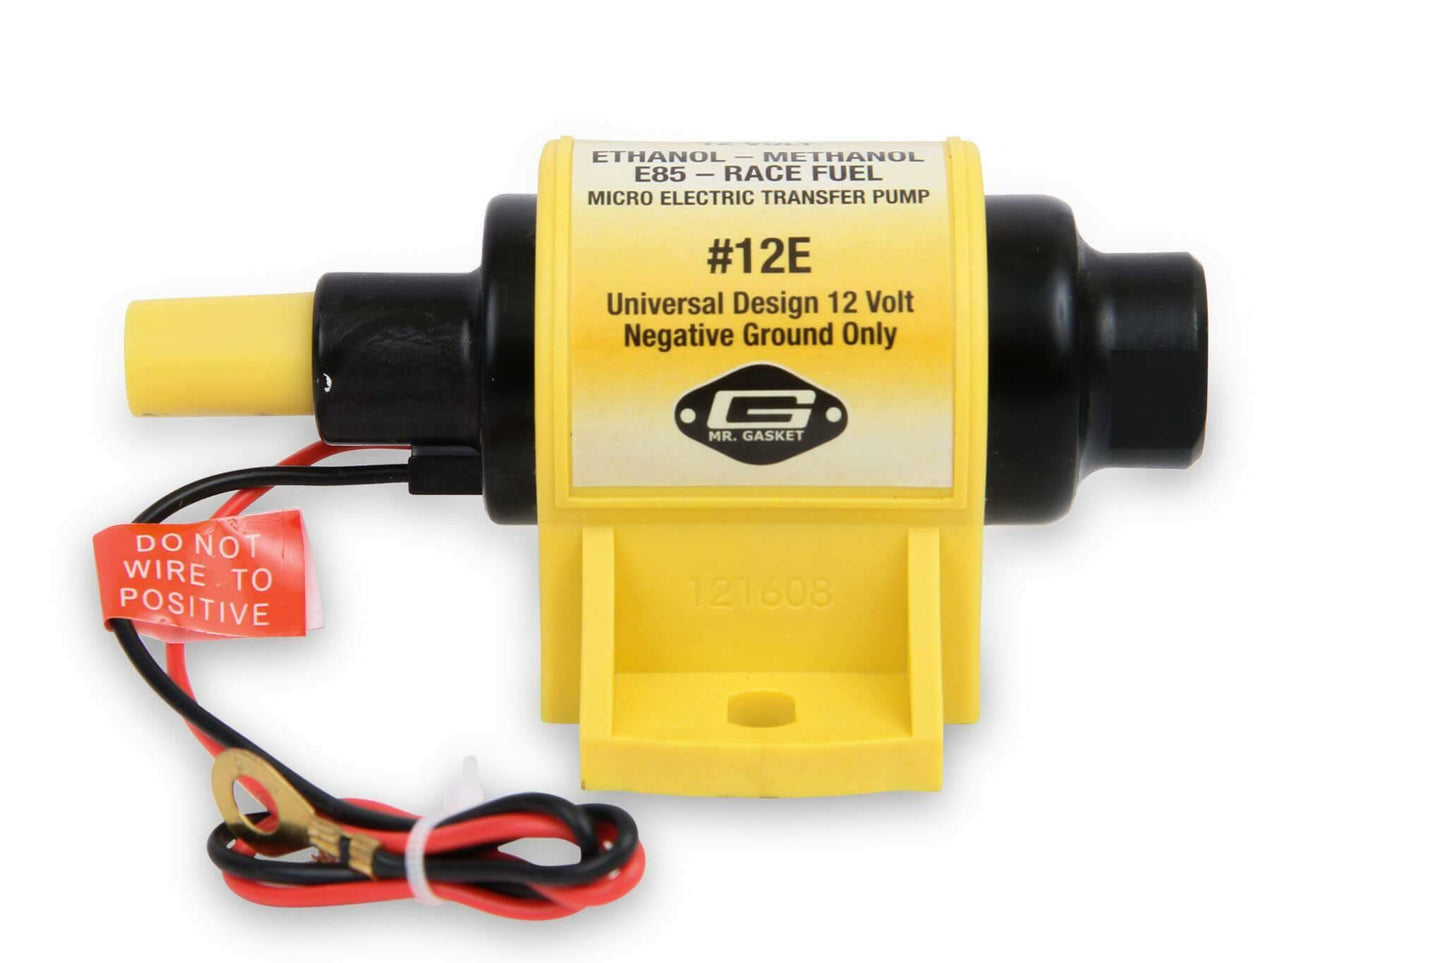 Mr. Gasket Micro Electric Fuel Pump - 12E